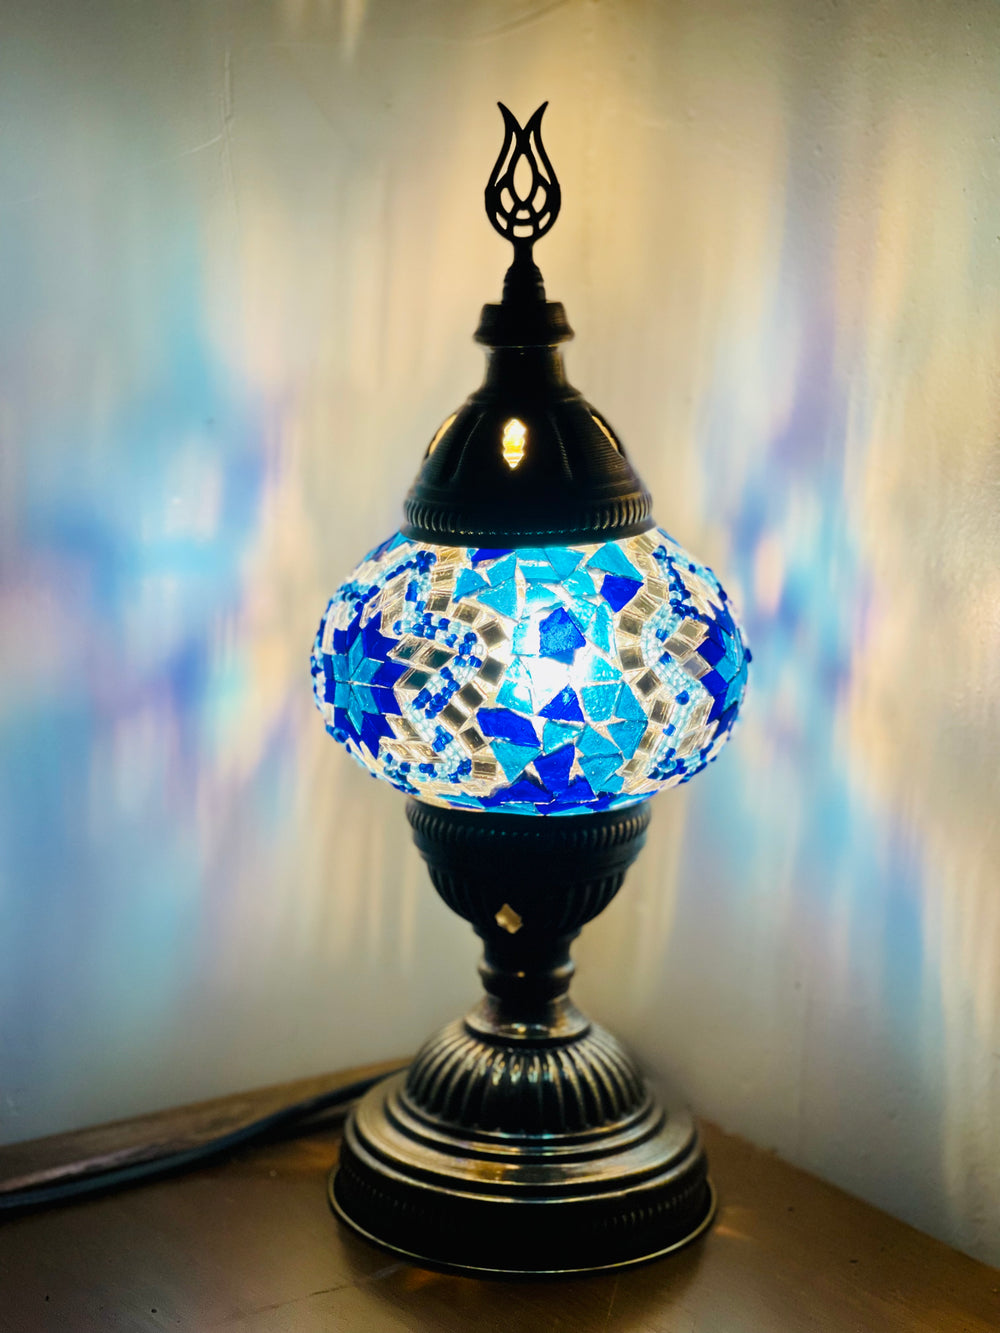 Turkish mosaic table lamp, center angle